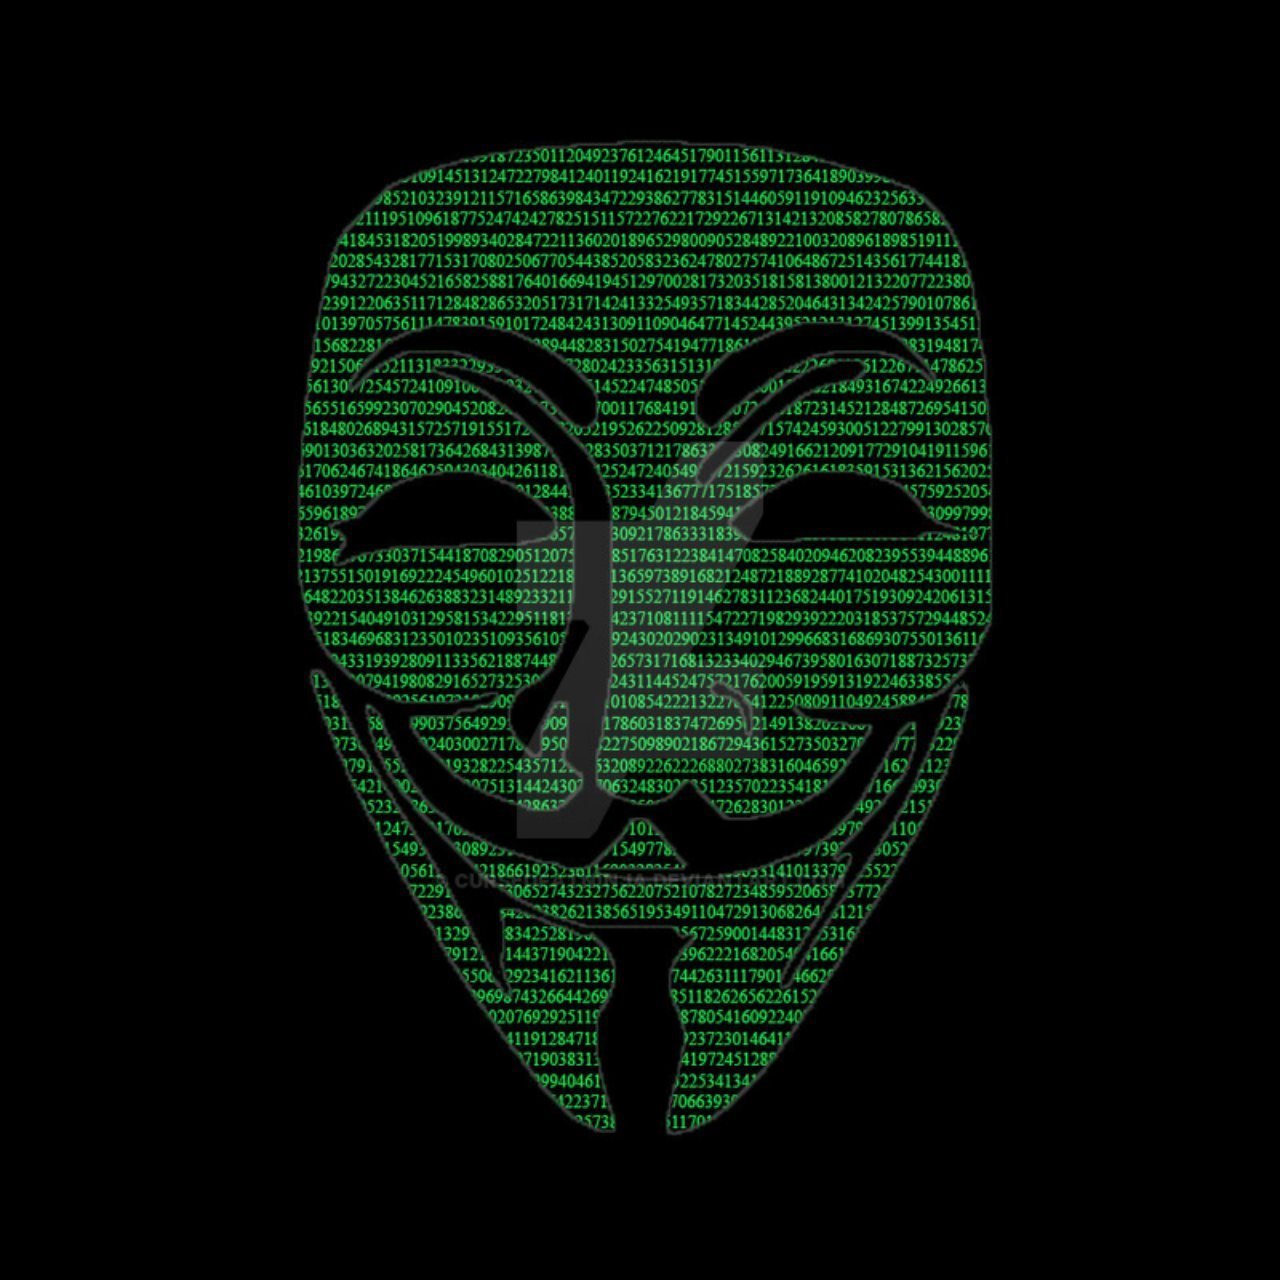 Мурз тг канал. Маска хакеров анонимус. Хакер в маске Анонимуса. Хакер анонимус лицо. Анонимус клан.